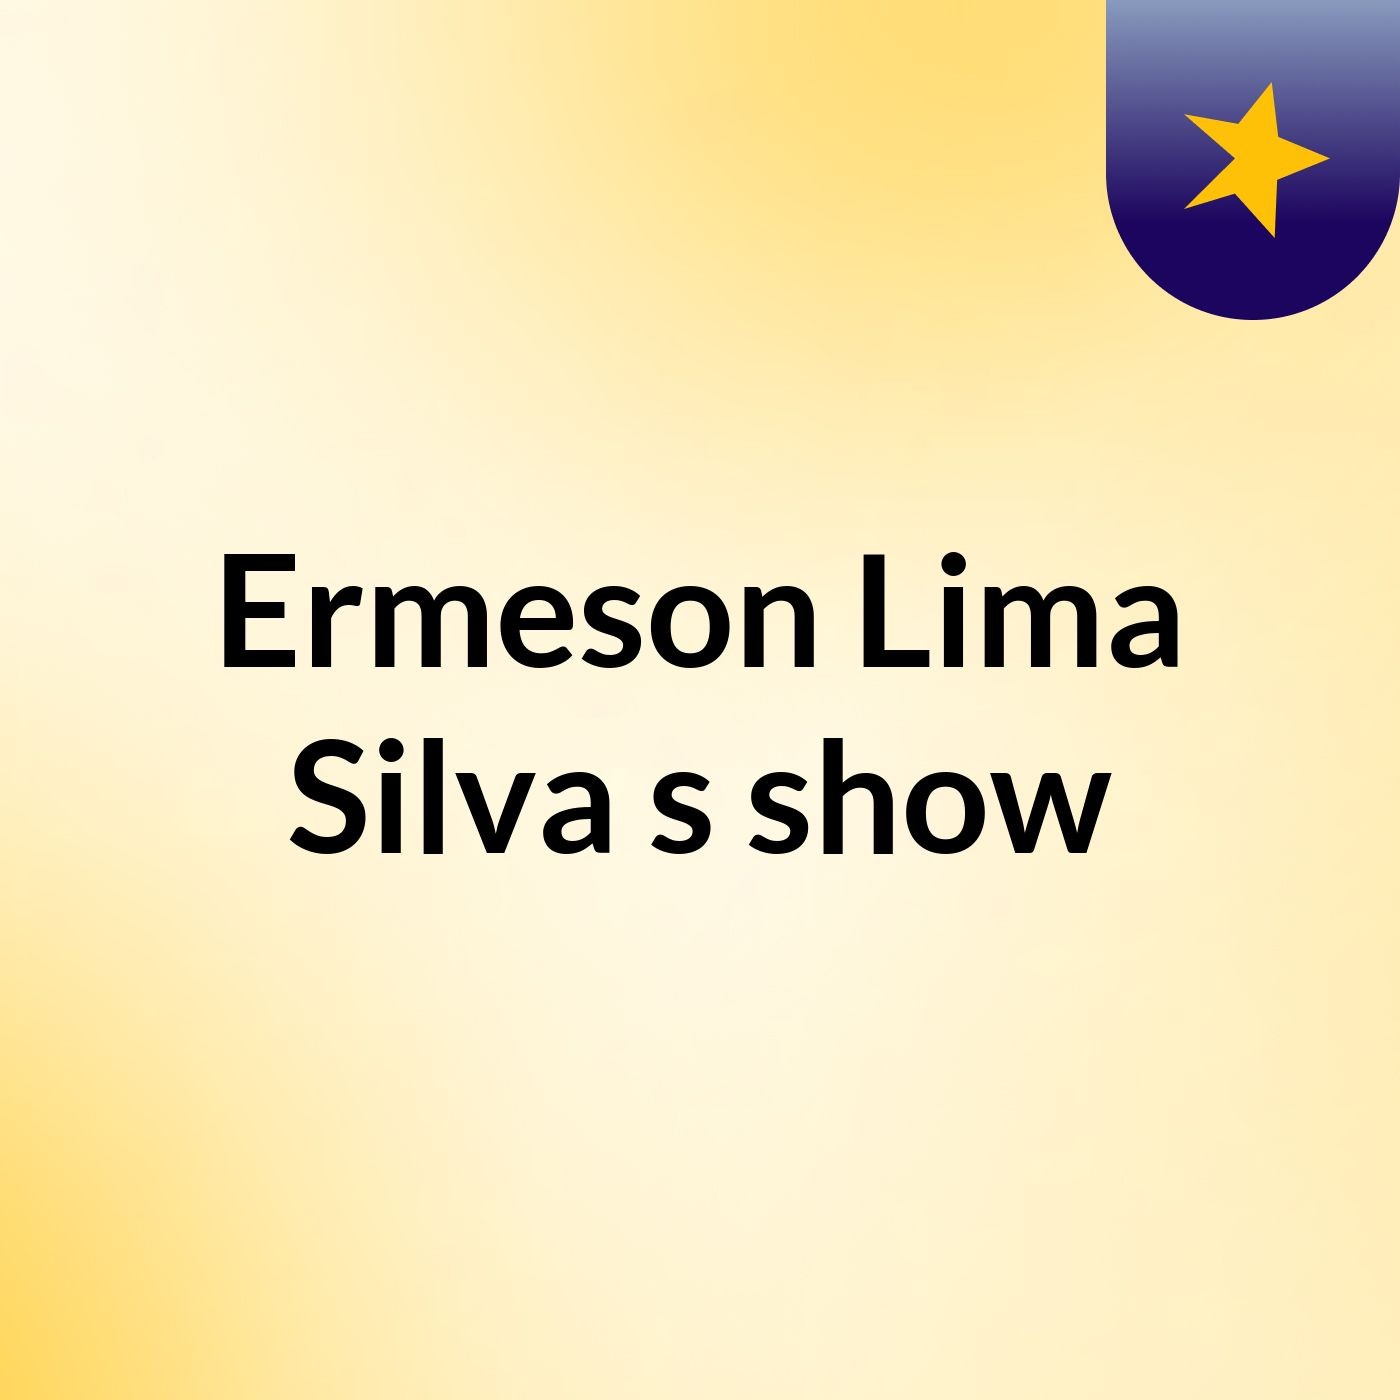 Ermeson Lima Silva's show